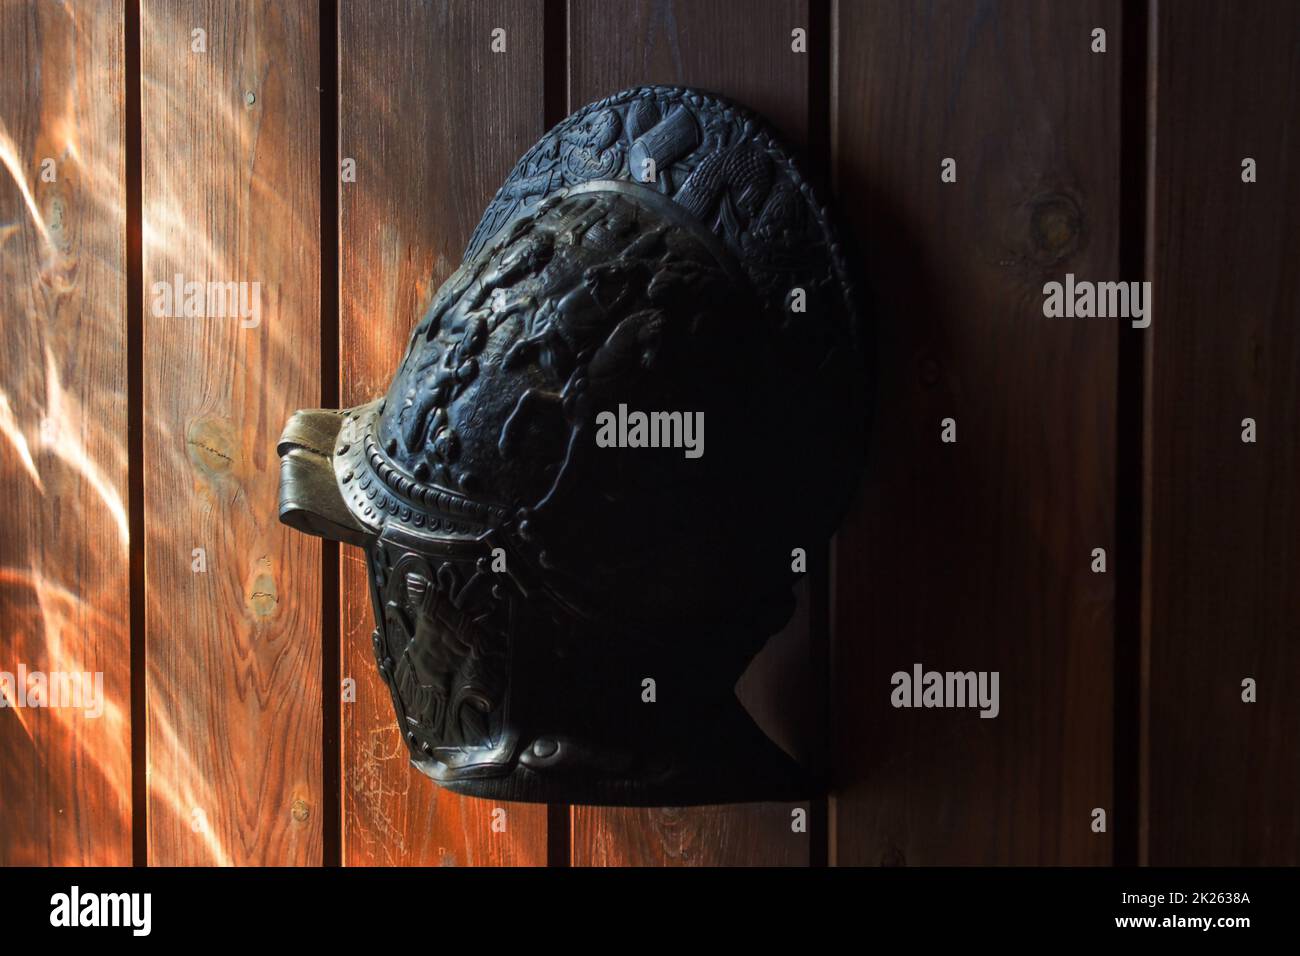 Ancient metal helmet hung on wood paneling Stock Photo